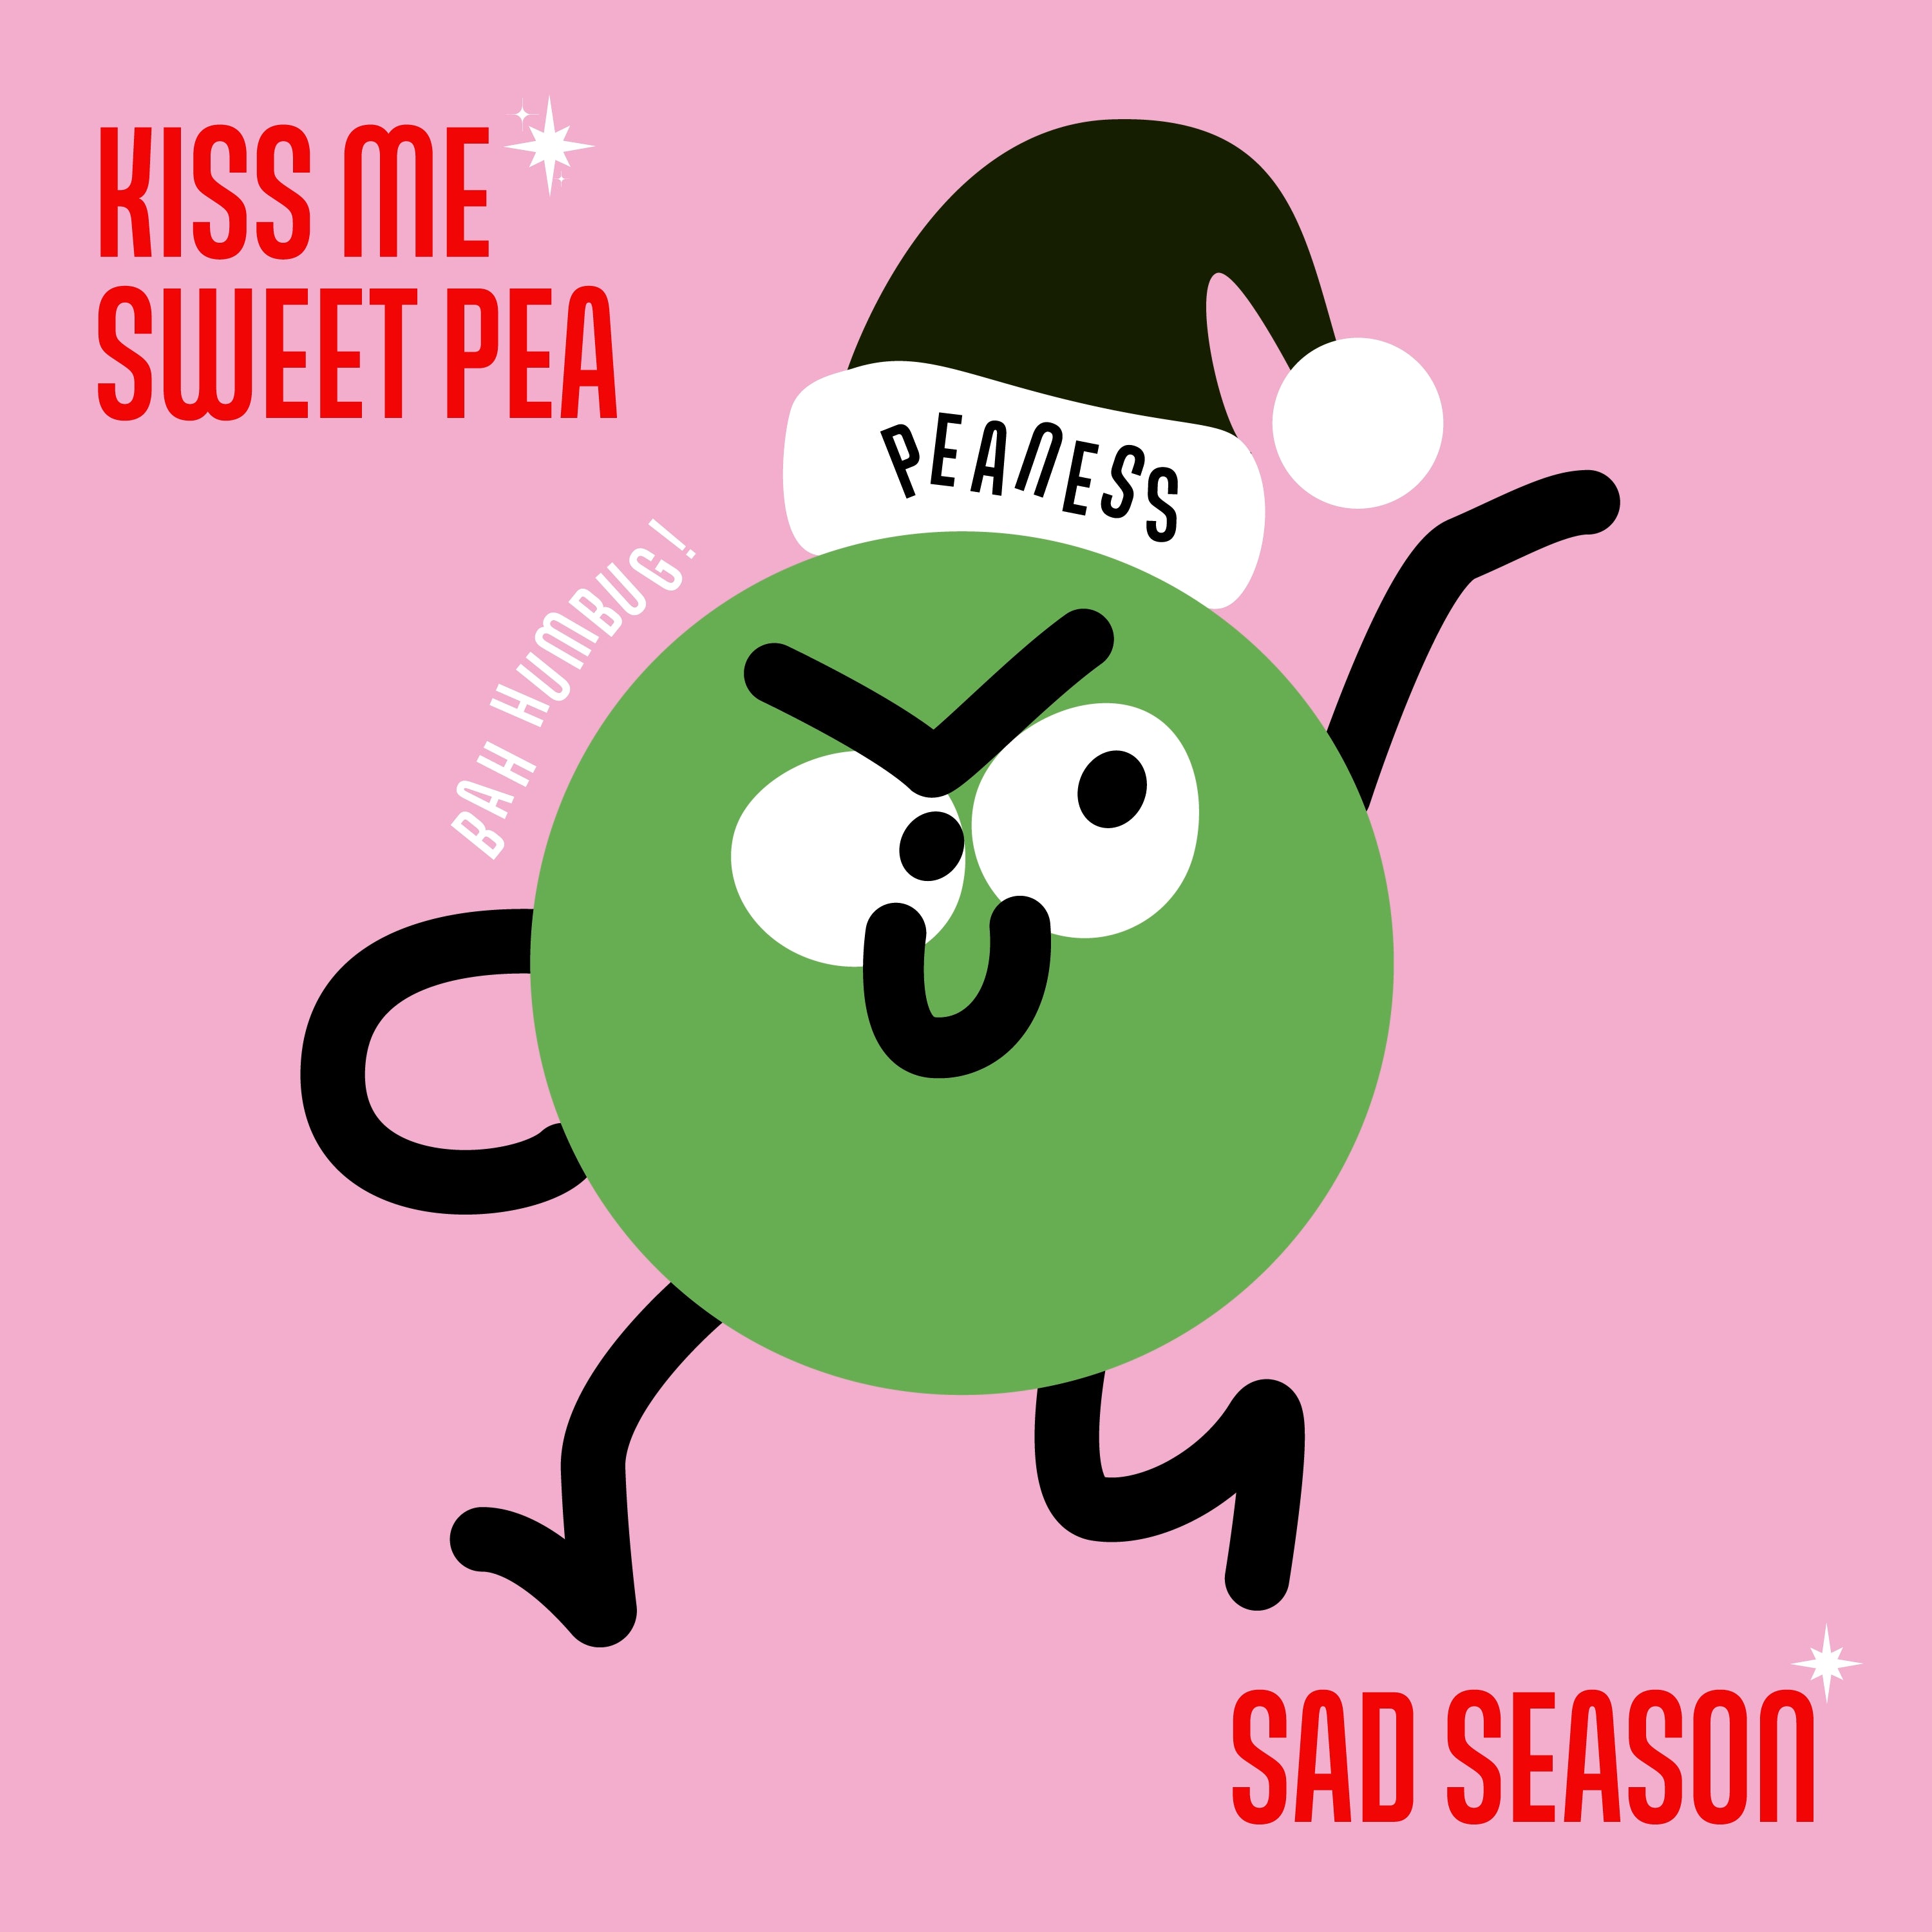 Peaness - Kiss Me Sweet Pea / Sad Season: Vinyl 7" Single